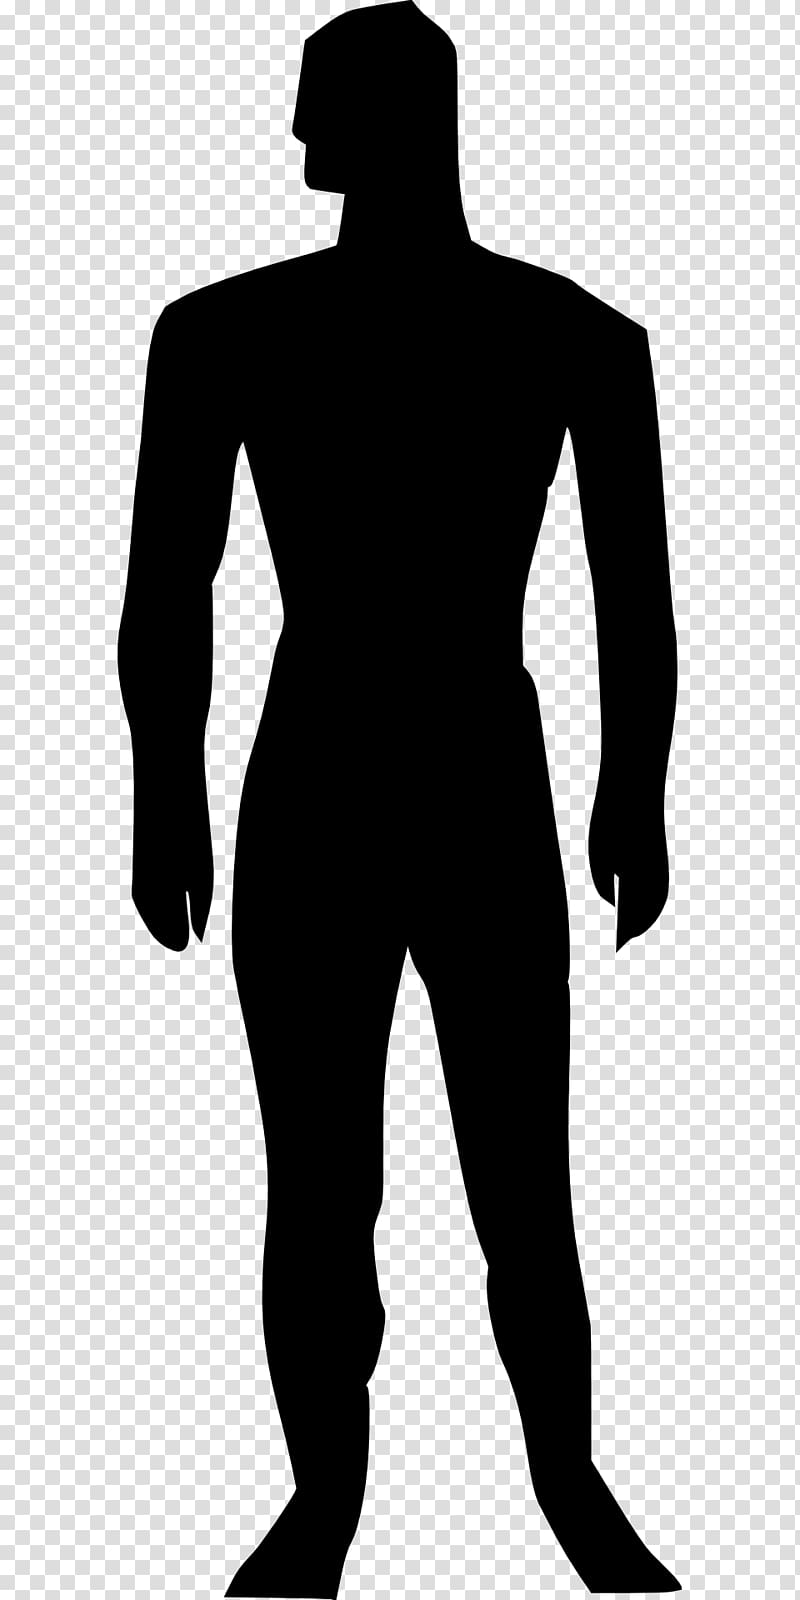 Human body Homo sapiens Human figure Silhouette , man silhouette transparent background PNG clipart